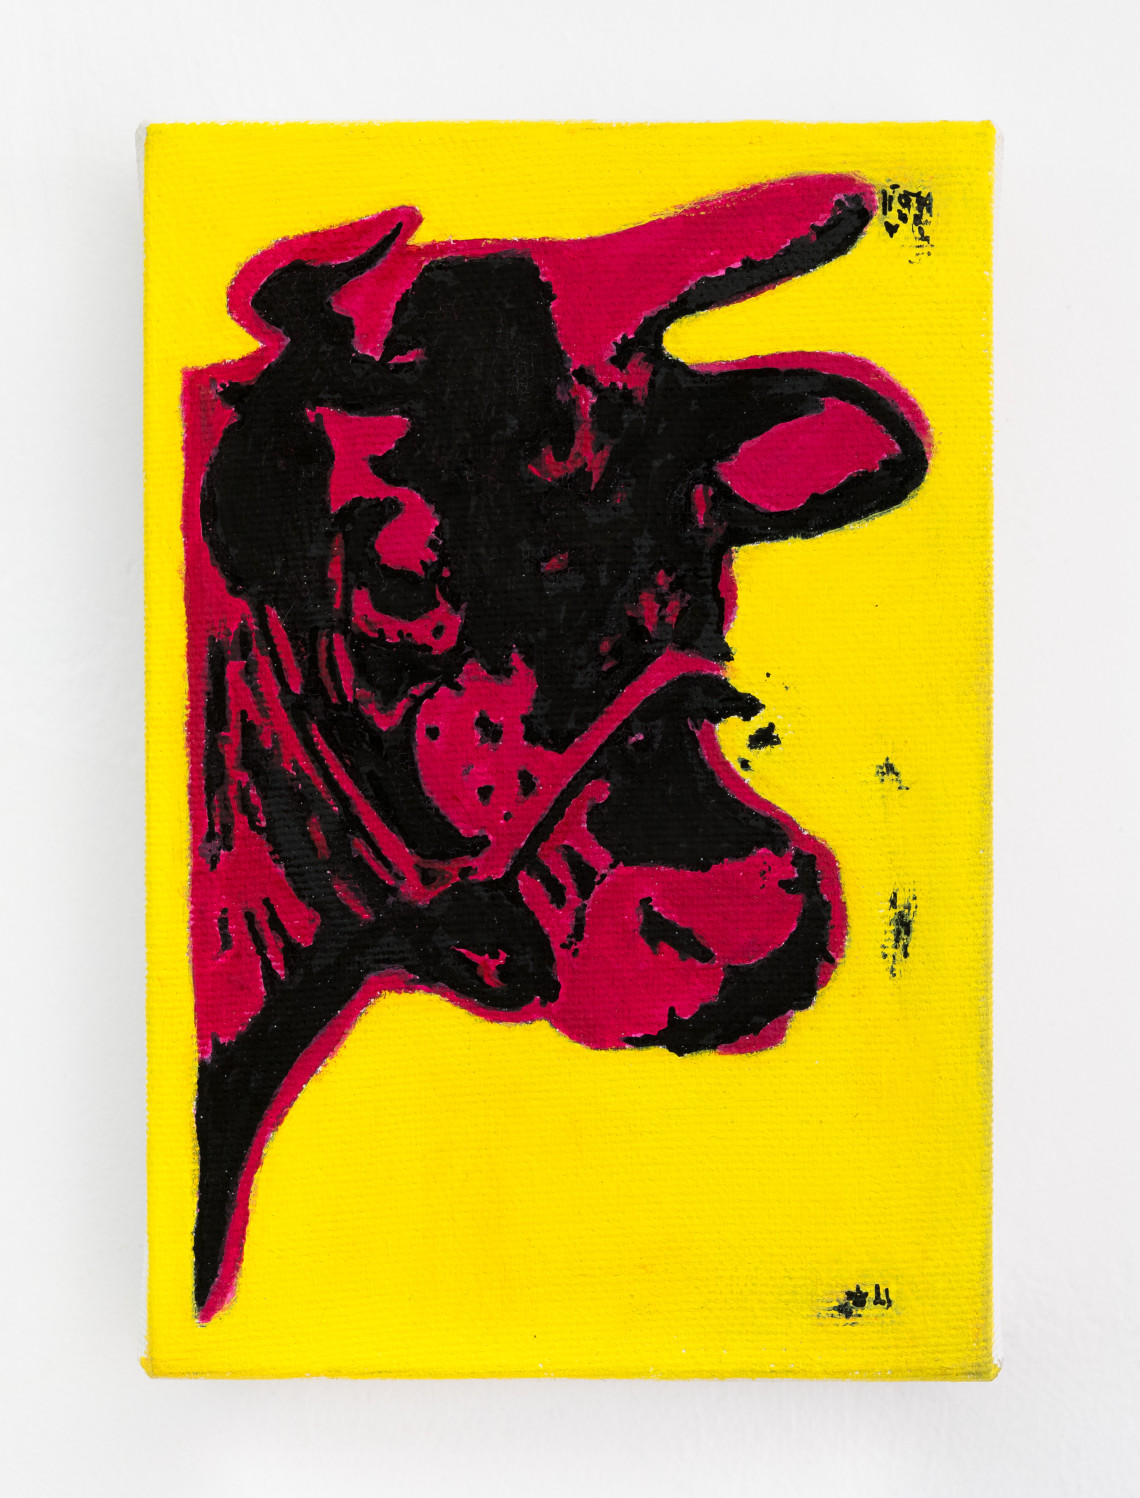  - Richard Pettibone Andy Warhol Cow 1966 Pink on Yellow 1970